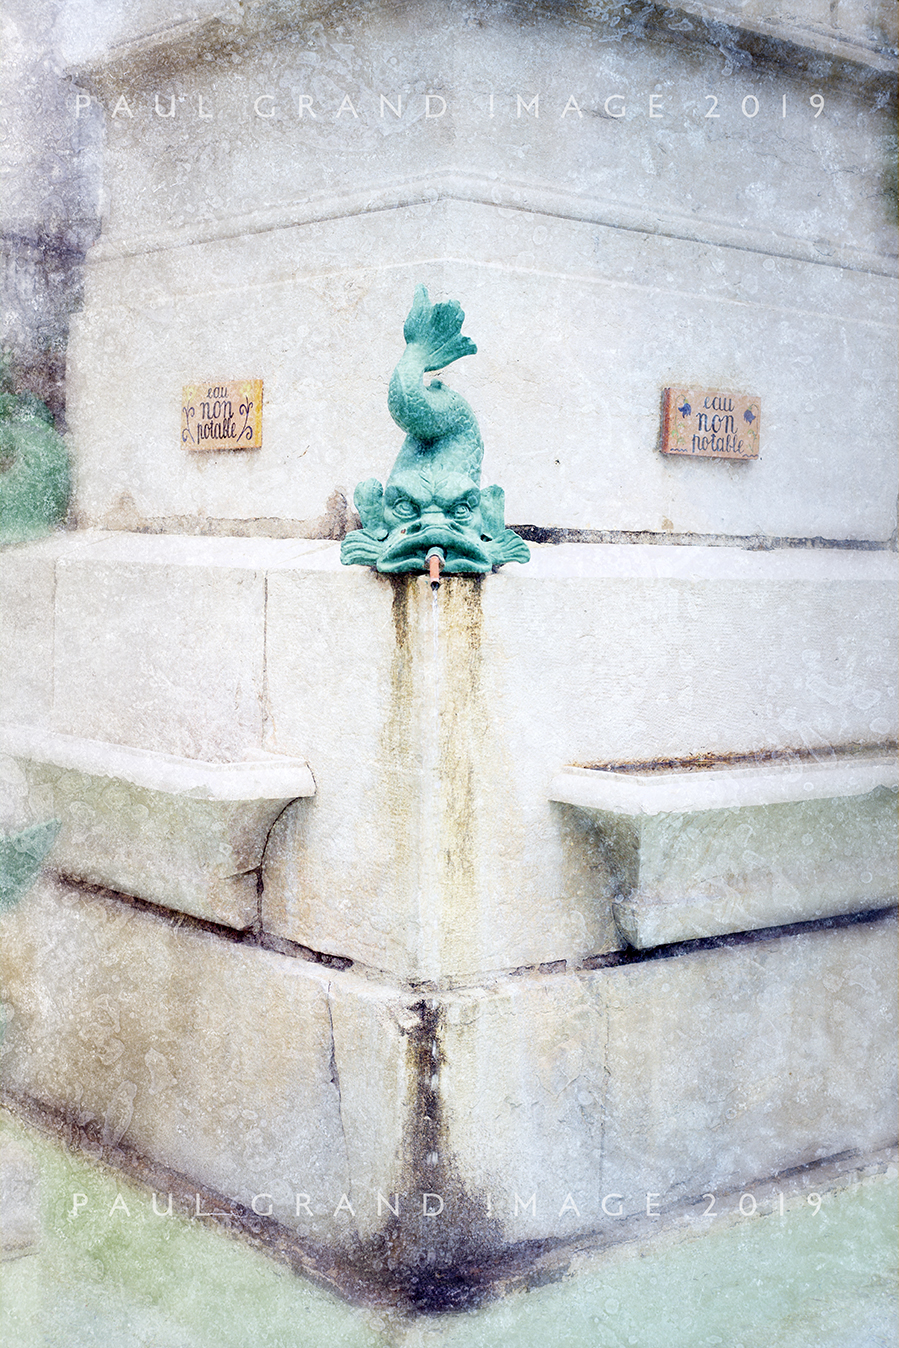 Provencal Fountain